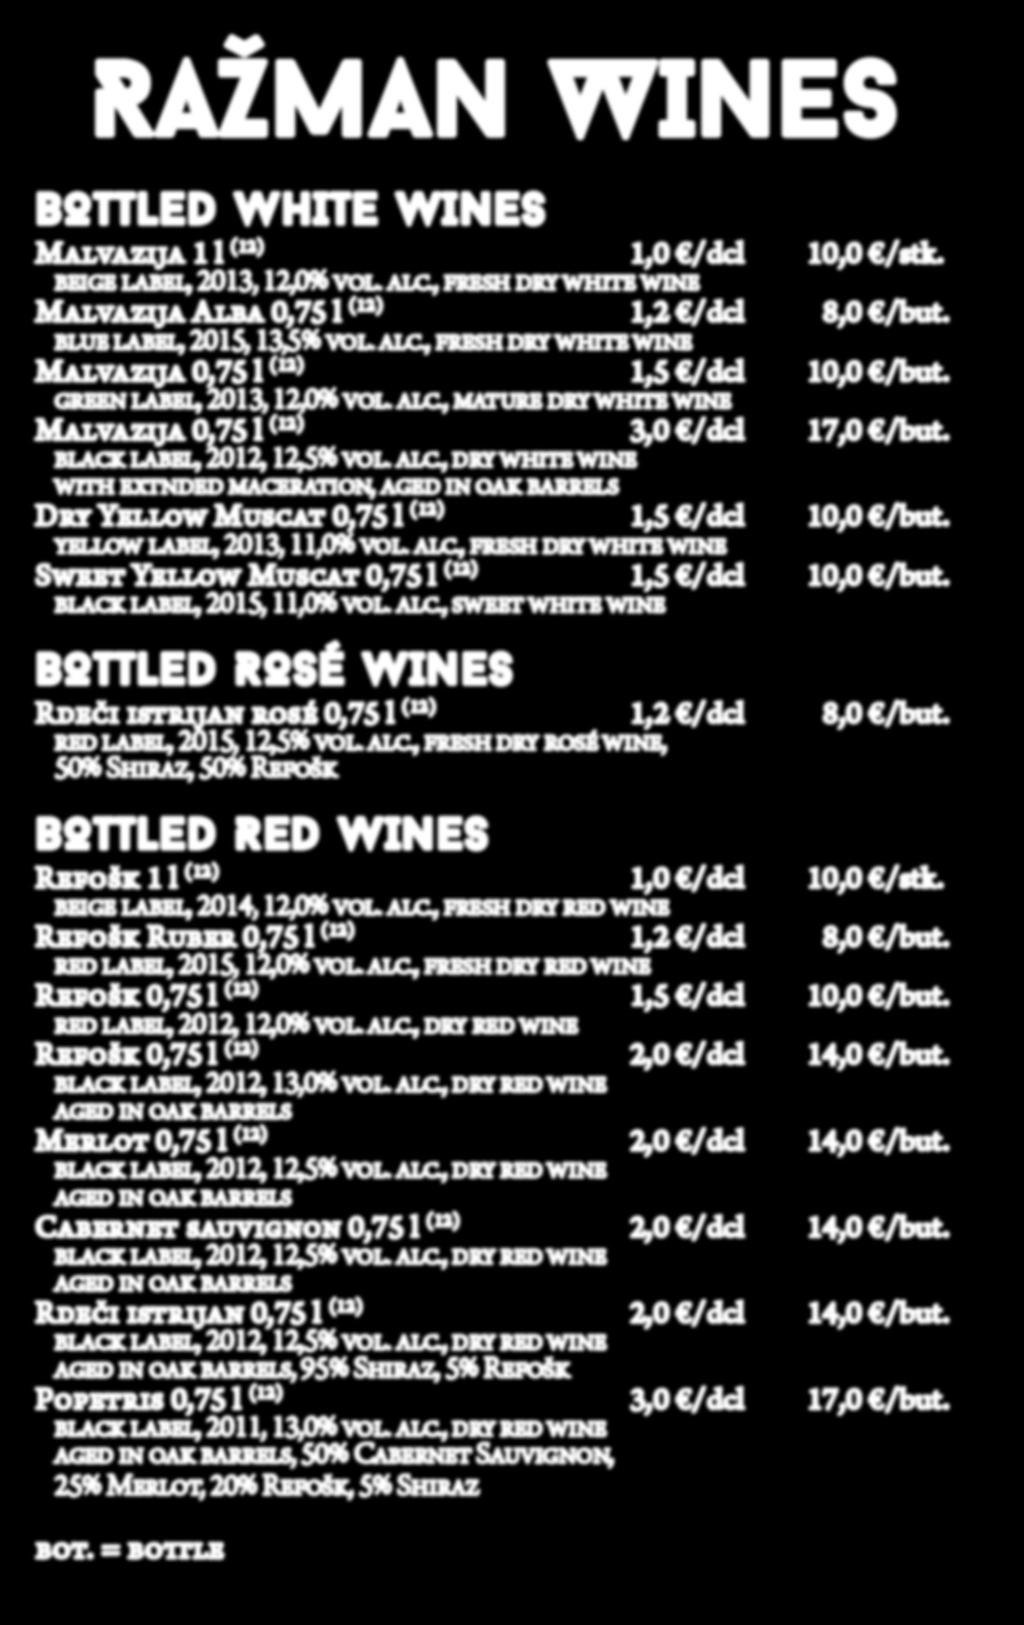 RAŽMAN WINES BOTTLED WHITE WINES Malvazija 1 l (12) 1,0 /dcl beige label, 2013, 12,0% vol. alc., fresh dry white wine 10,0 /stk. Malvazija Alba 0,75 l (12) 1,2 /dcl blue label, 2015, 13,5% vol. alc., fresh dry white wine 8,0 /but.